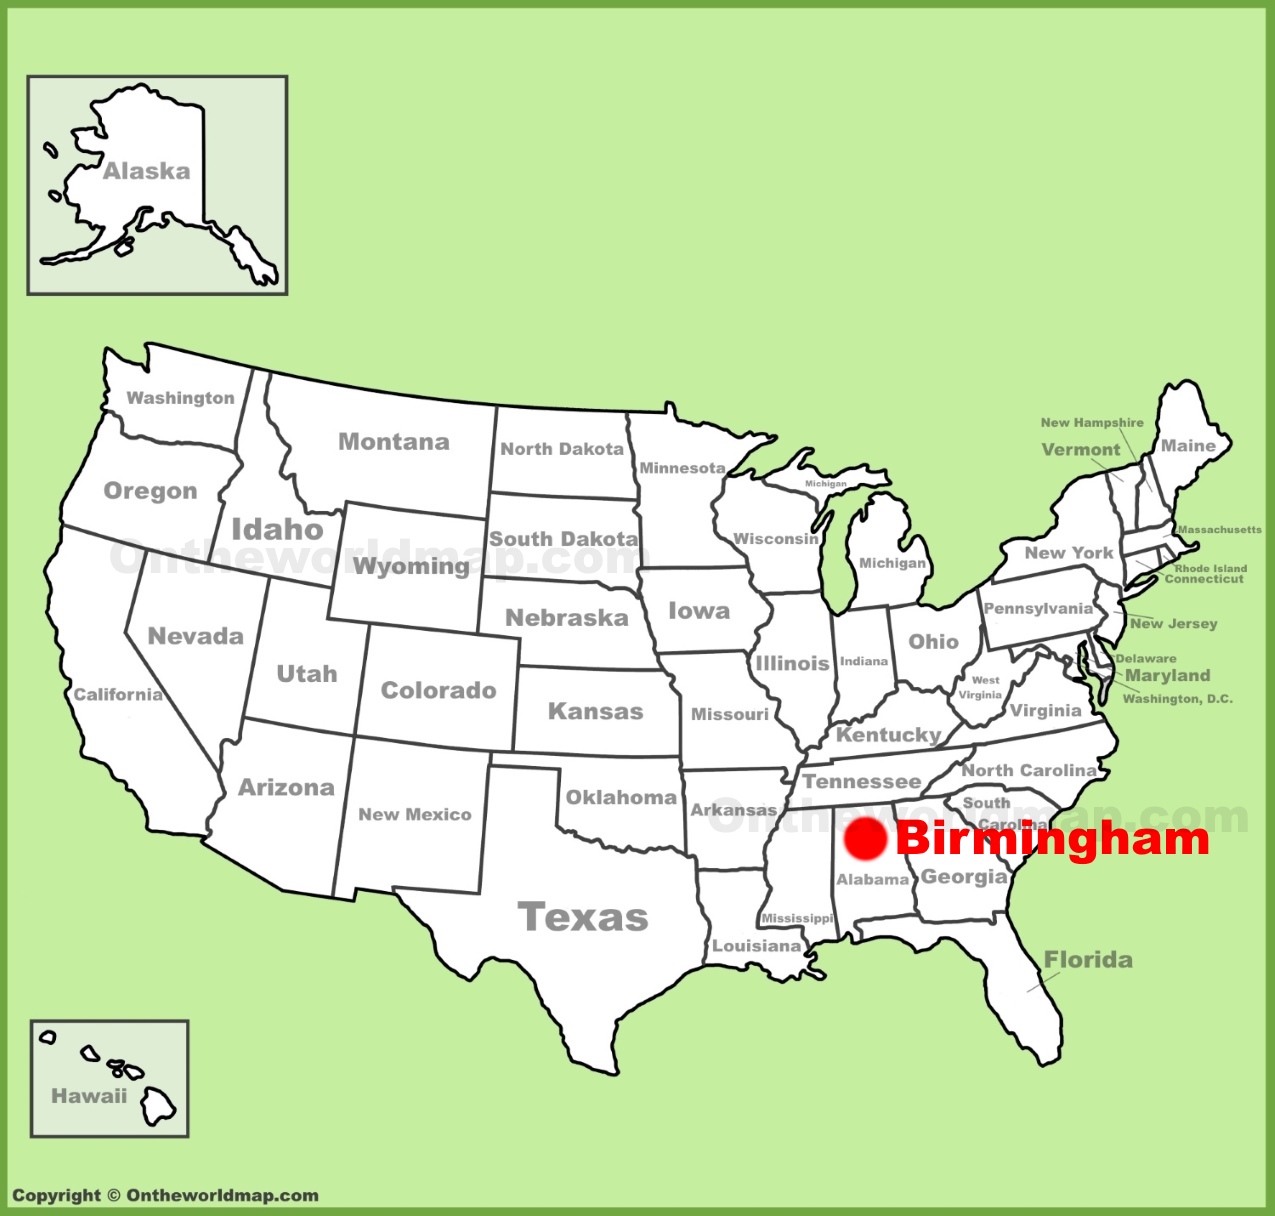 Birmingham Alabama Map Get The Facts About 11 Growing Birmingham